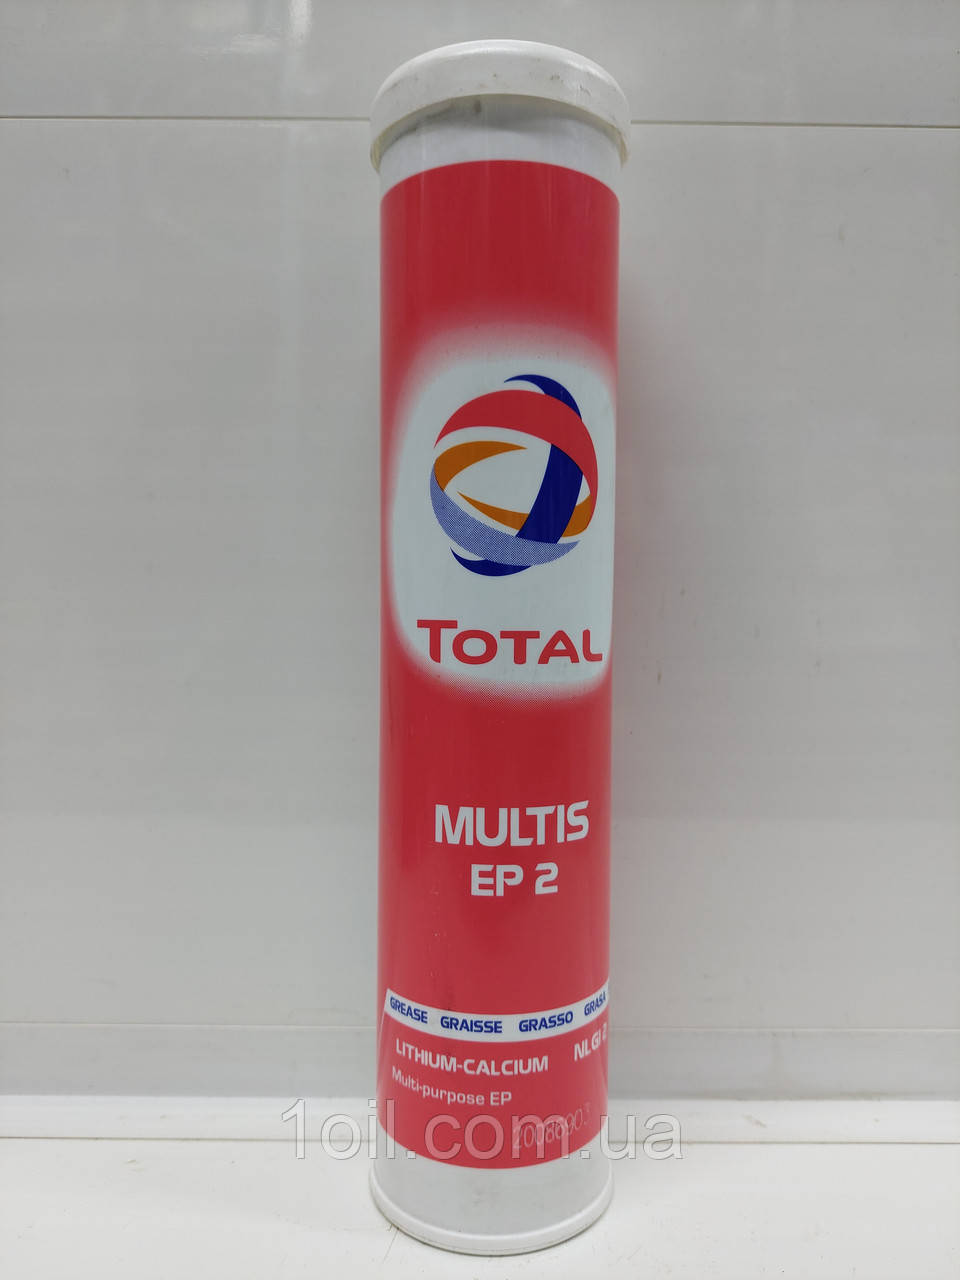 Мастило TOTAL MULTIS EP2 (Lithium-Calcium) 0,4 кг